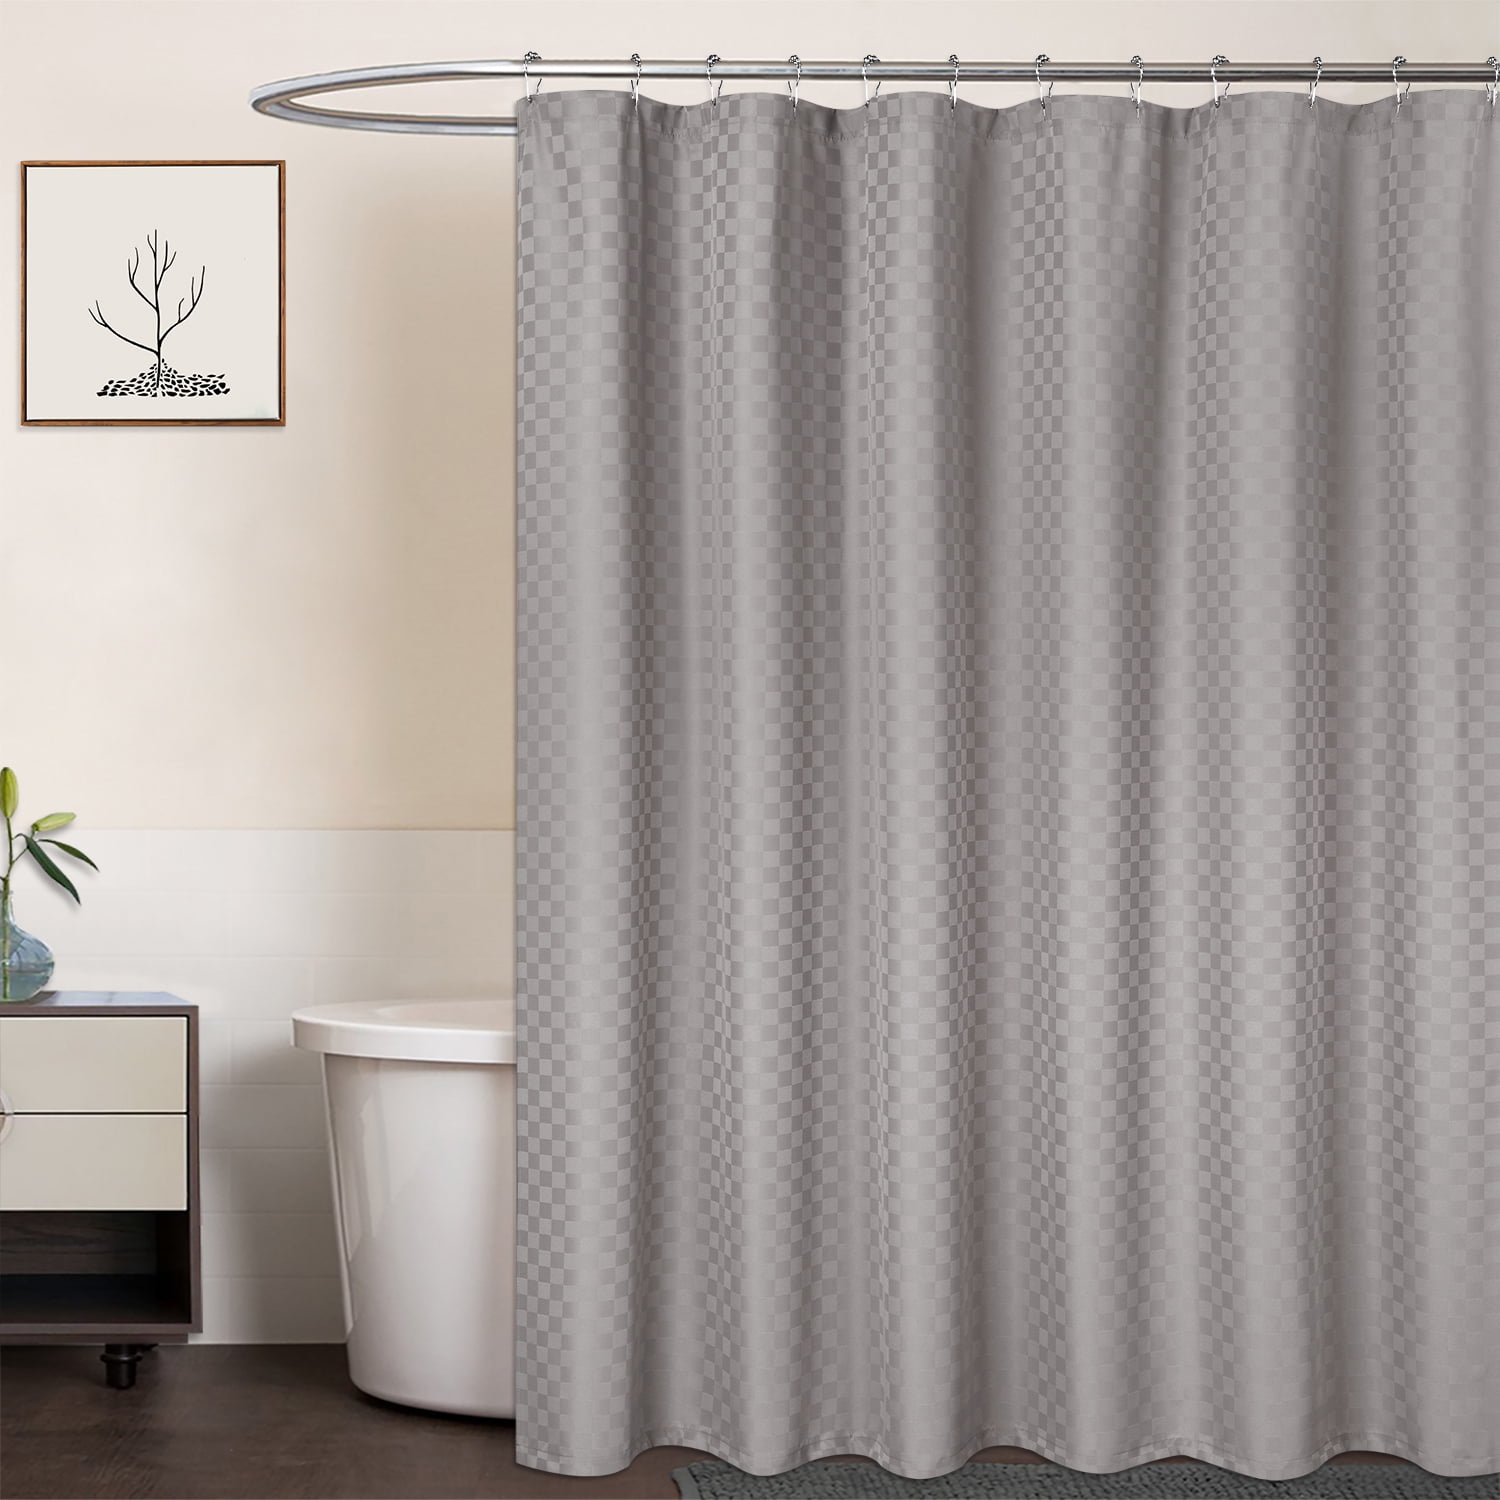 Louis vuitton bathroom set luxury shower curtain waterproof